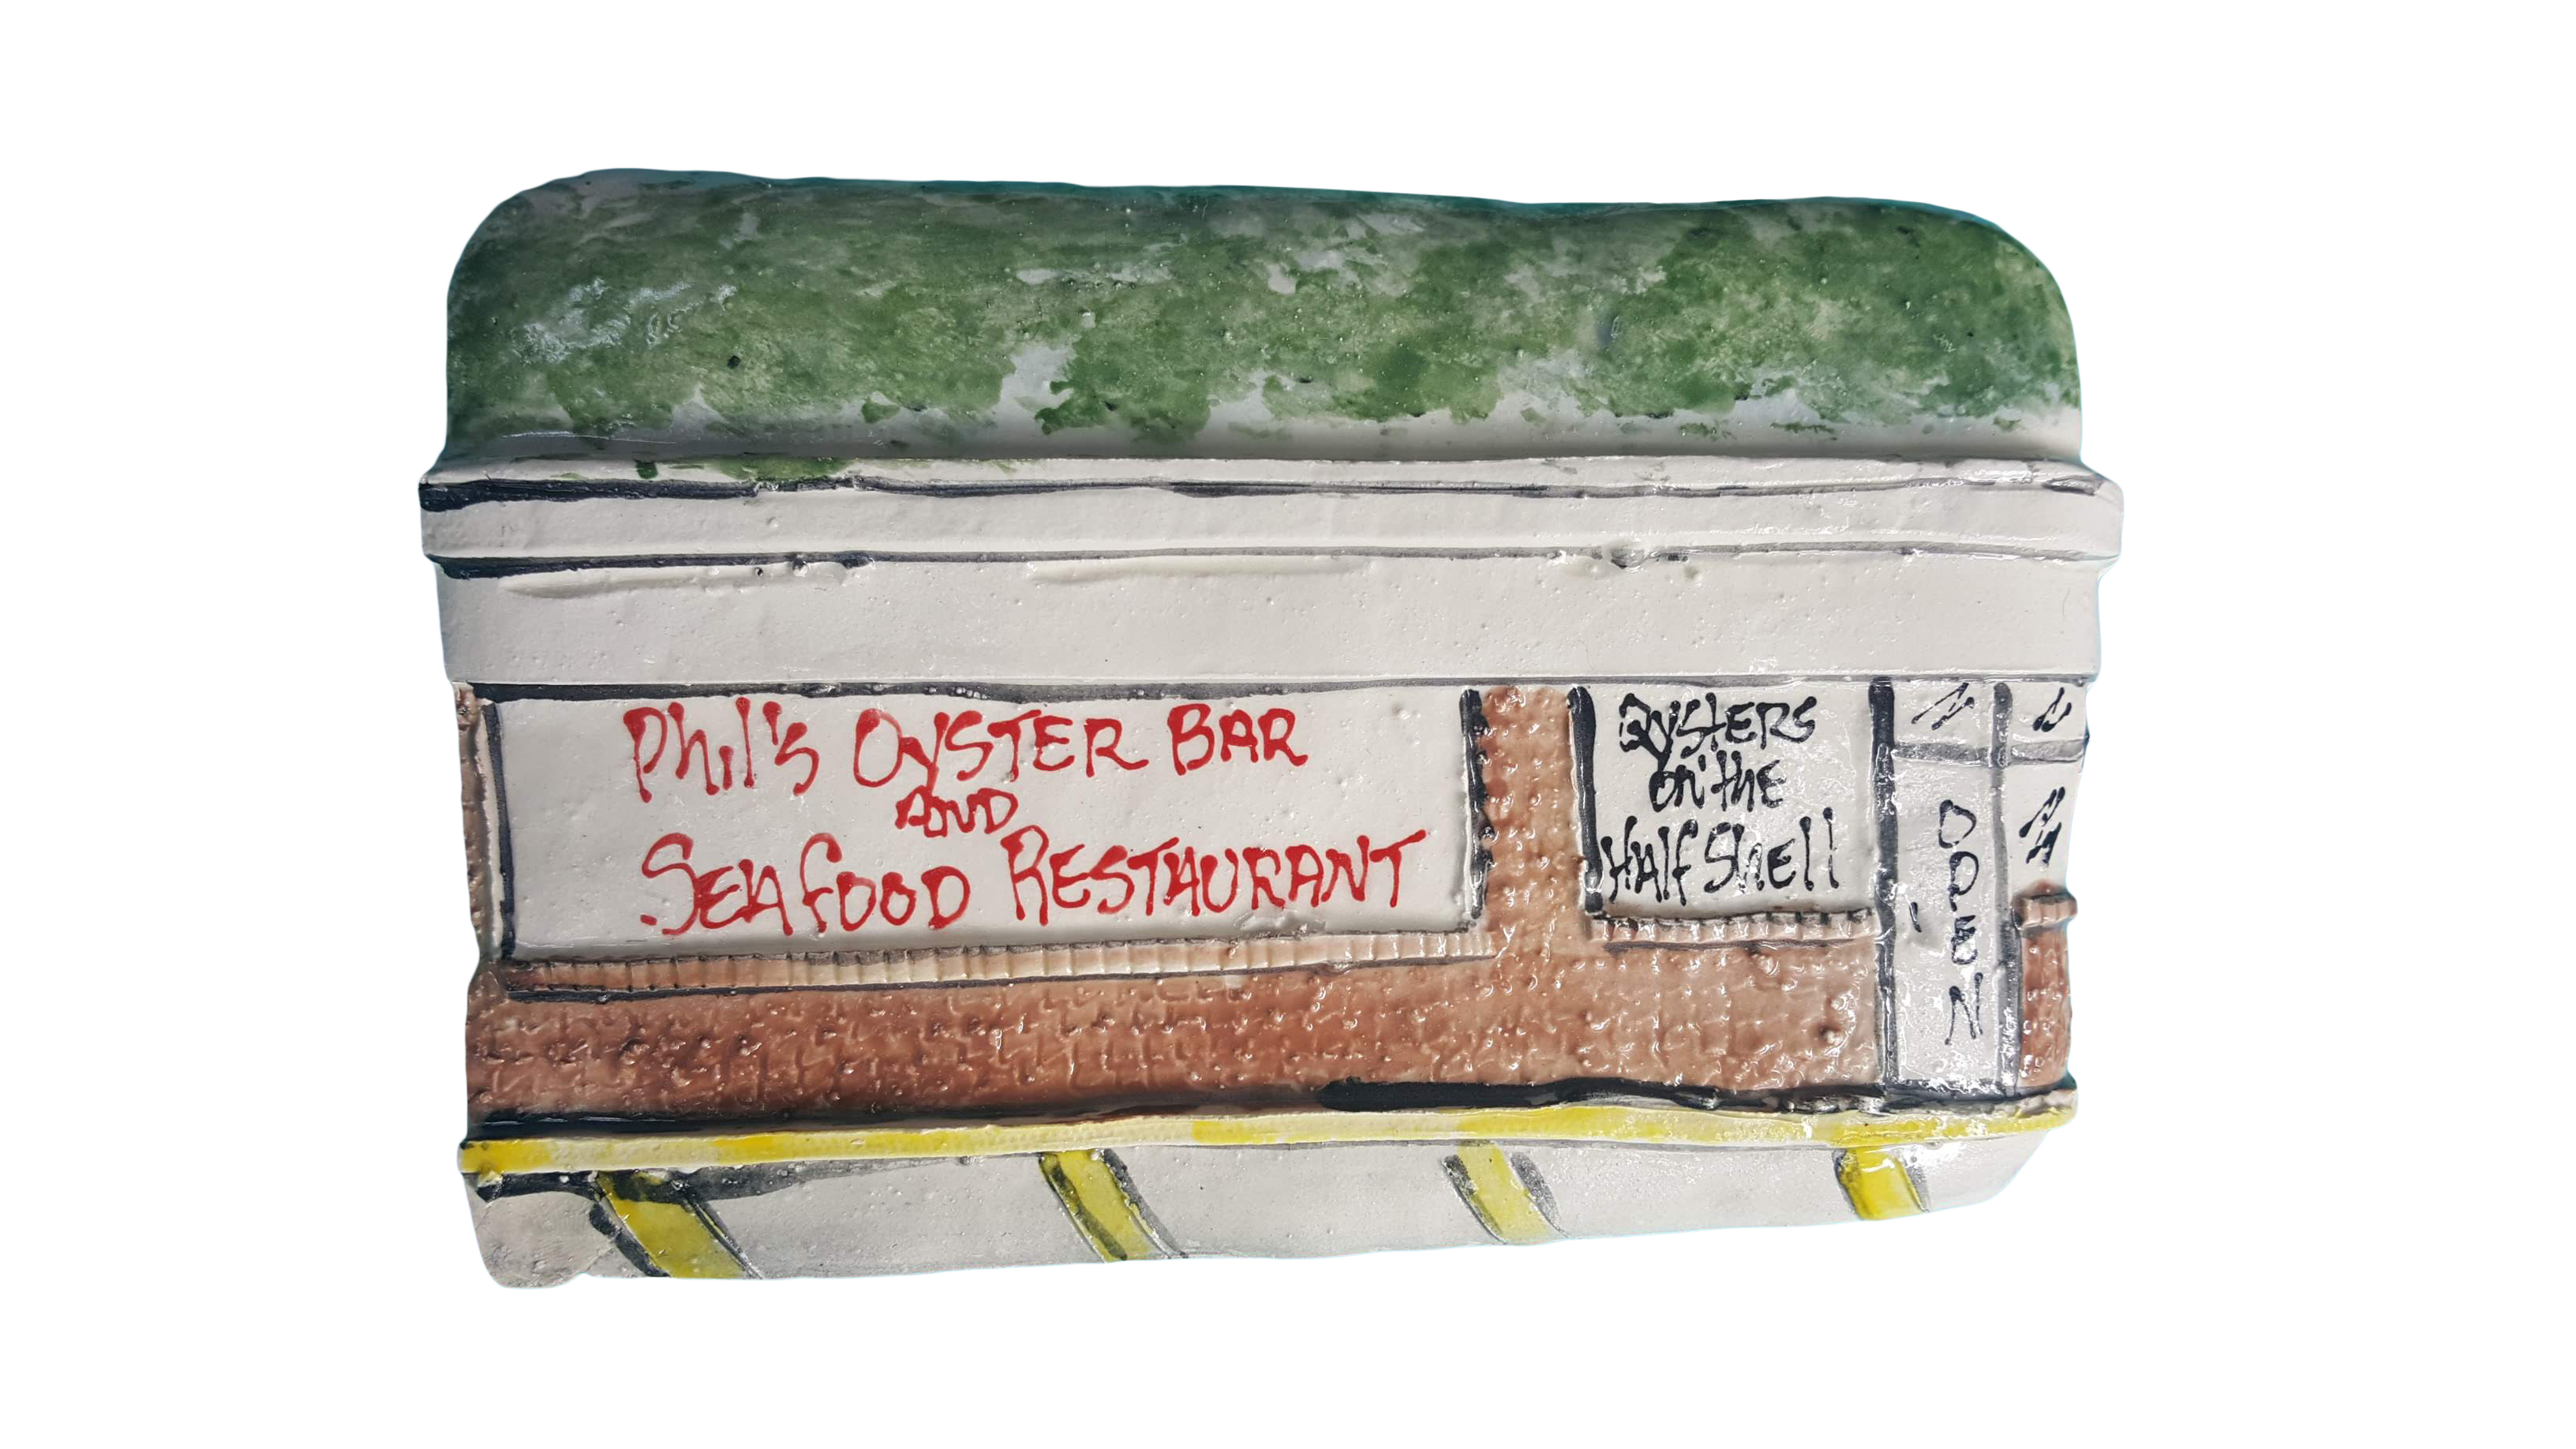 Phil’s Oyster Bar & Restaurant